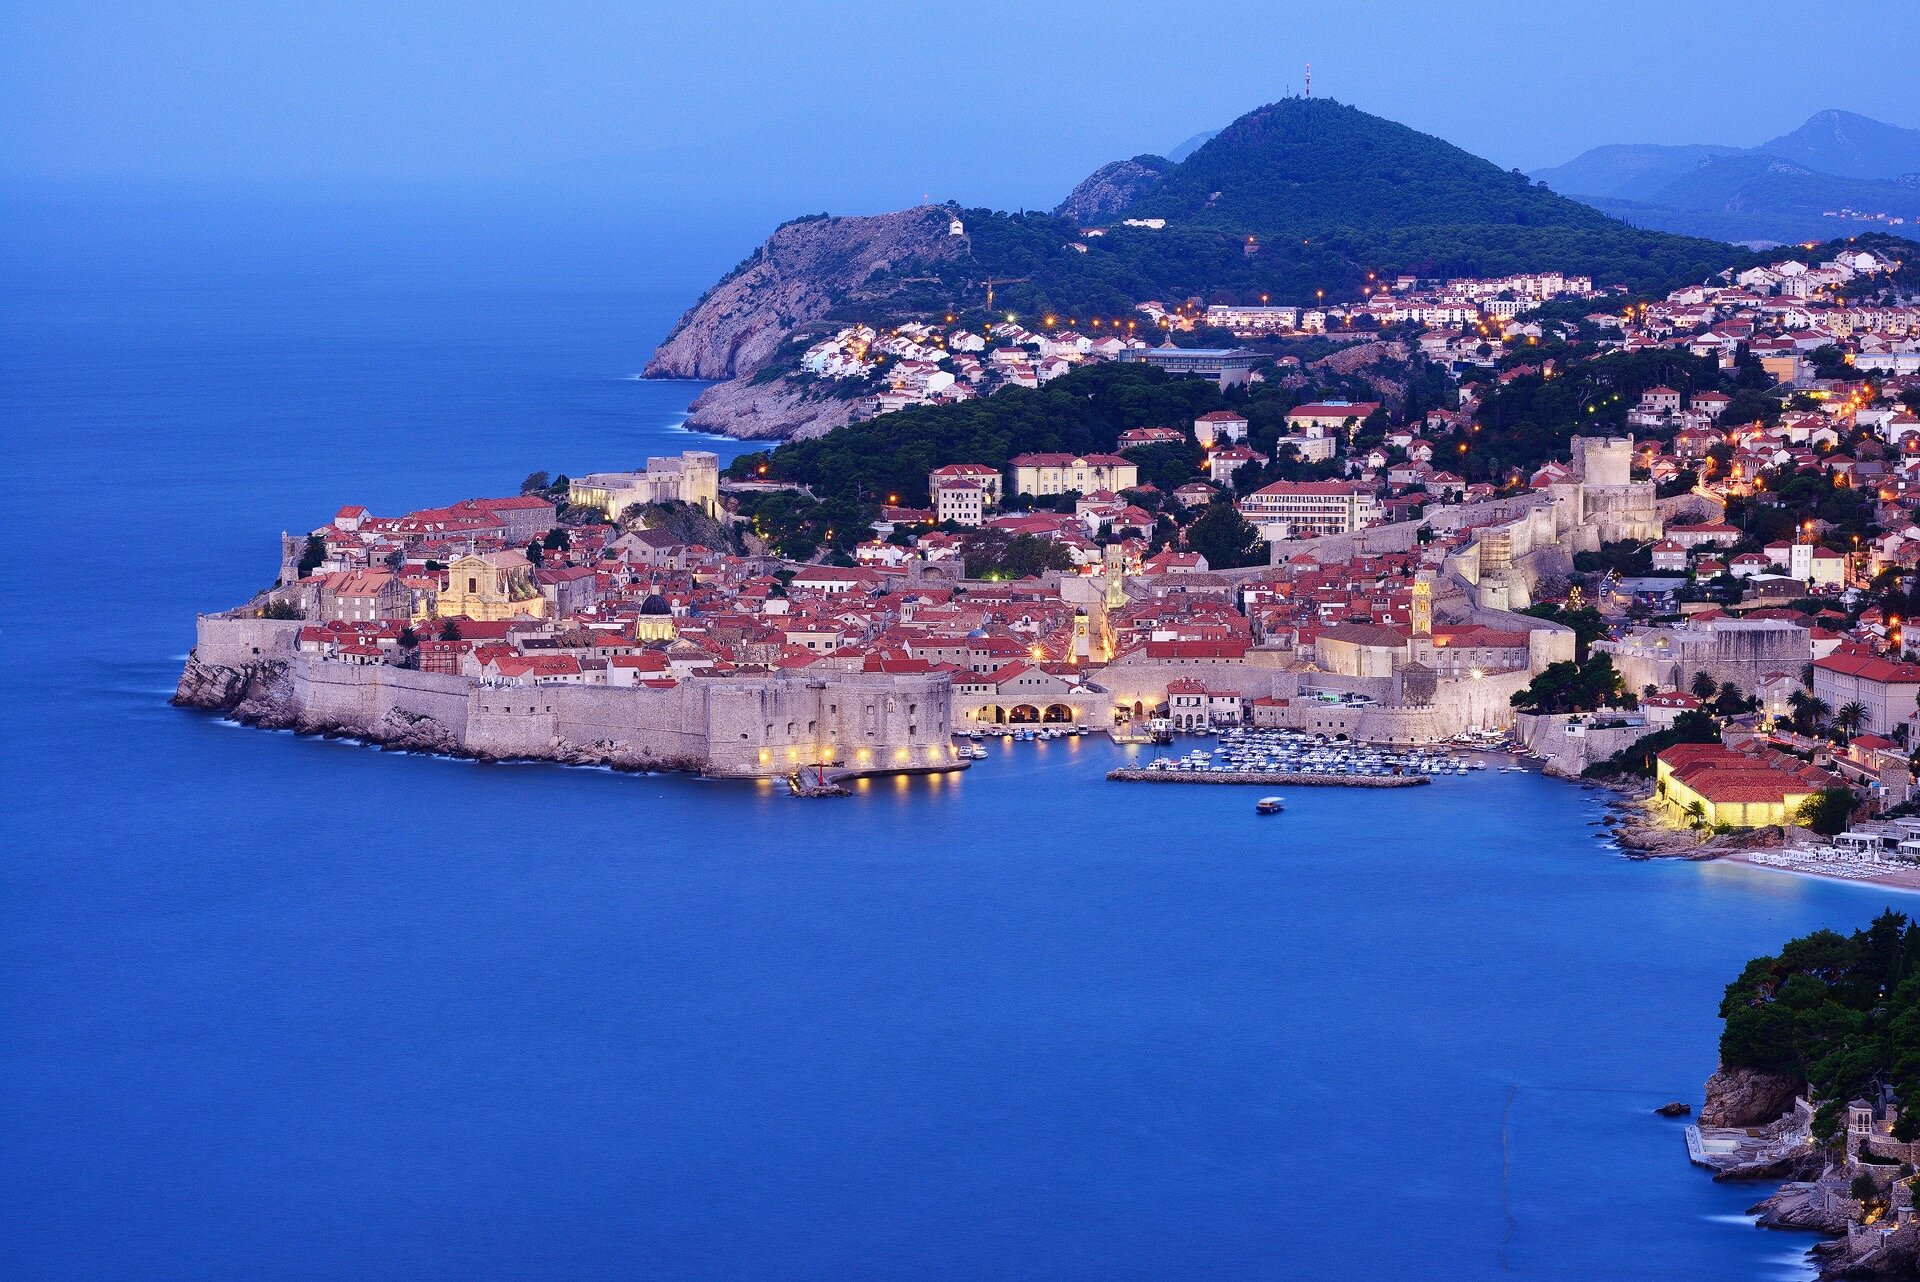 andrewvillone_Dubrovnik evening_GC Faves.jpg